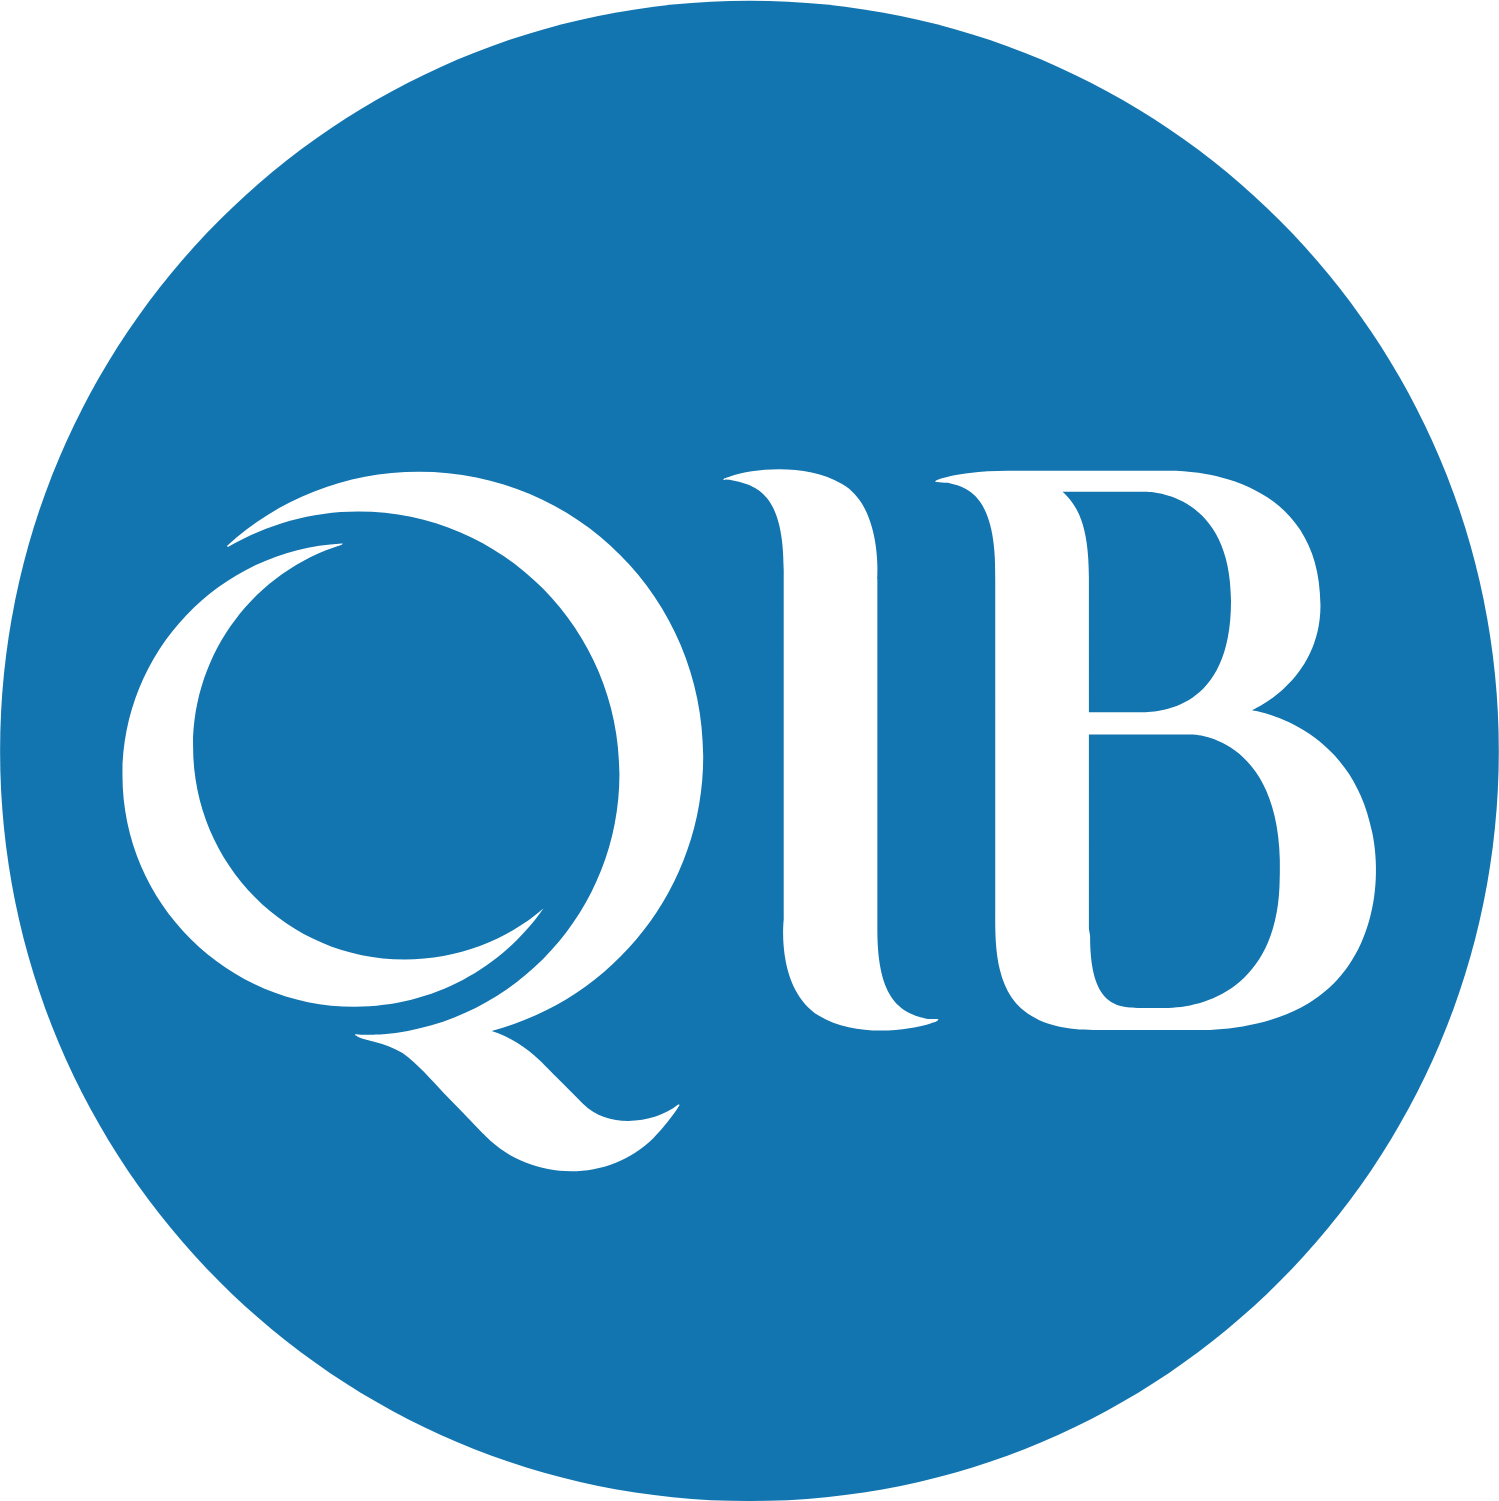 Qatar Islamic Bank logo (PNG transparent)